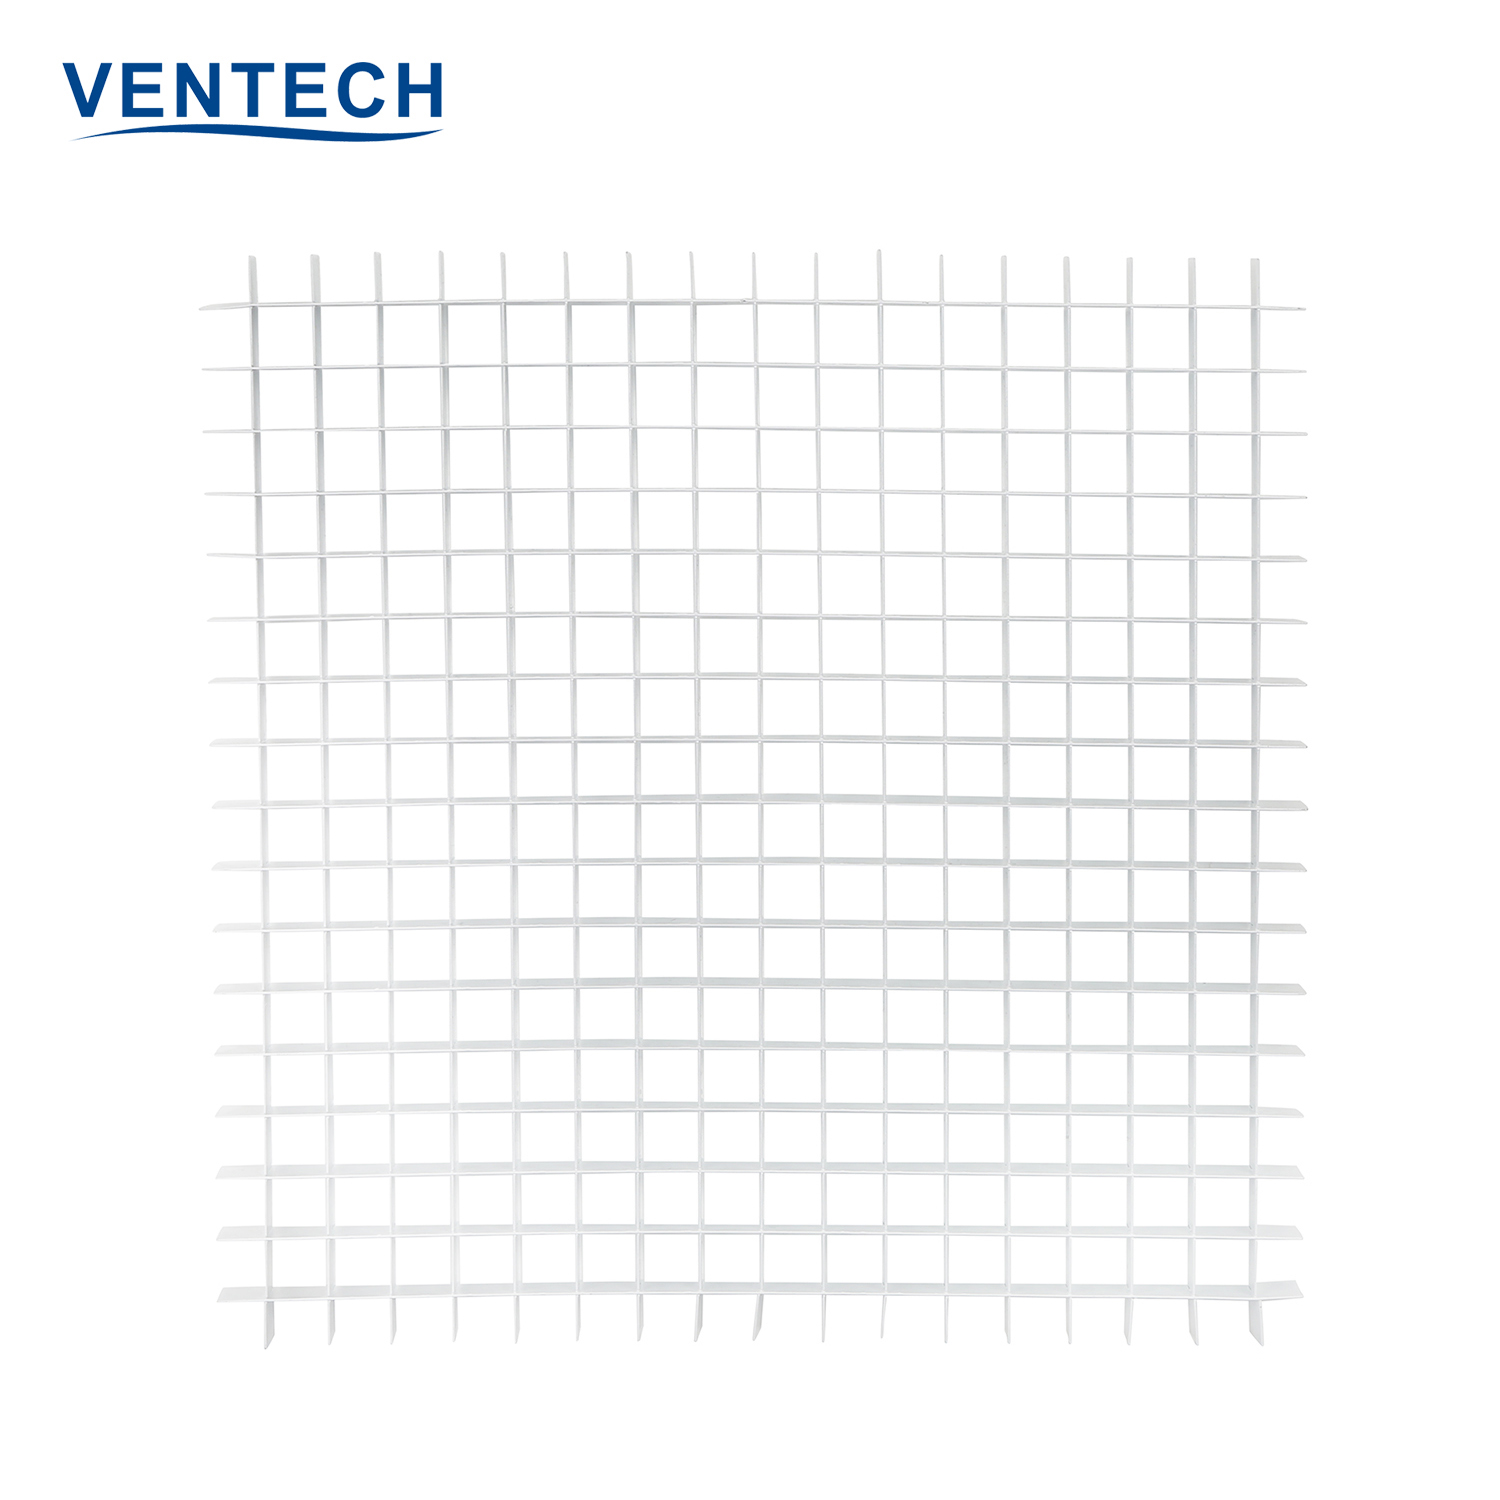 Ventech grille return air series for long corridors-1